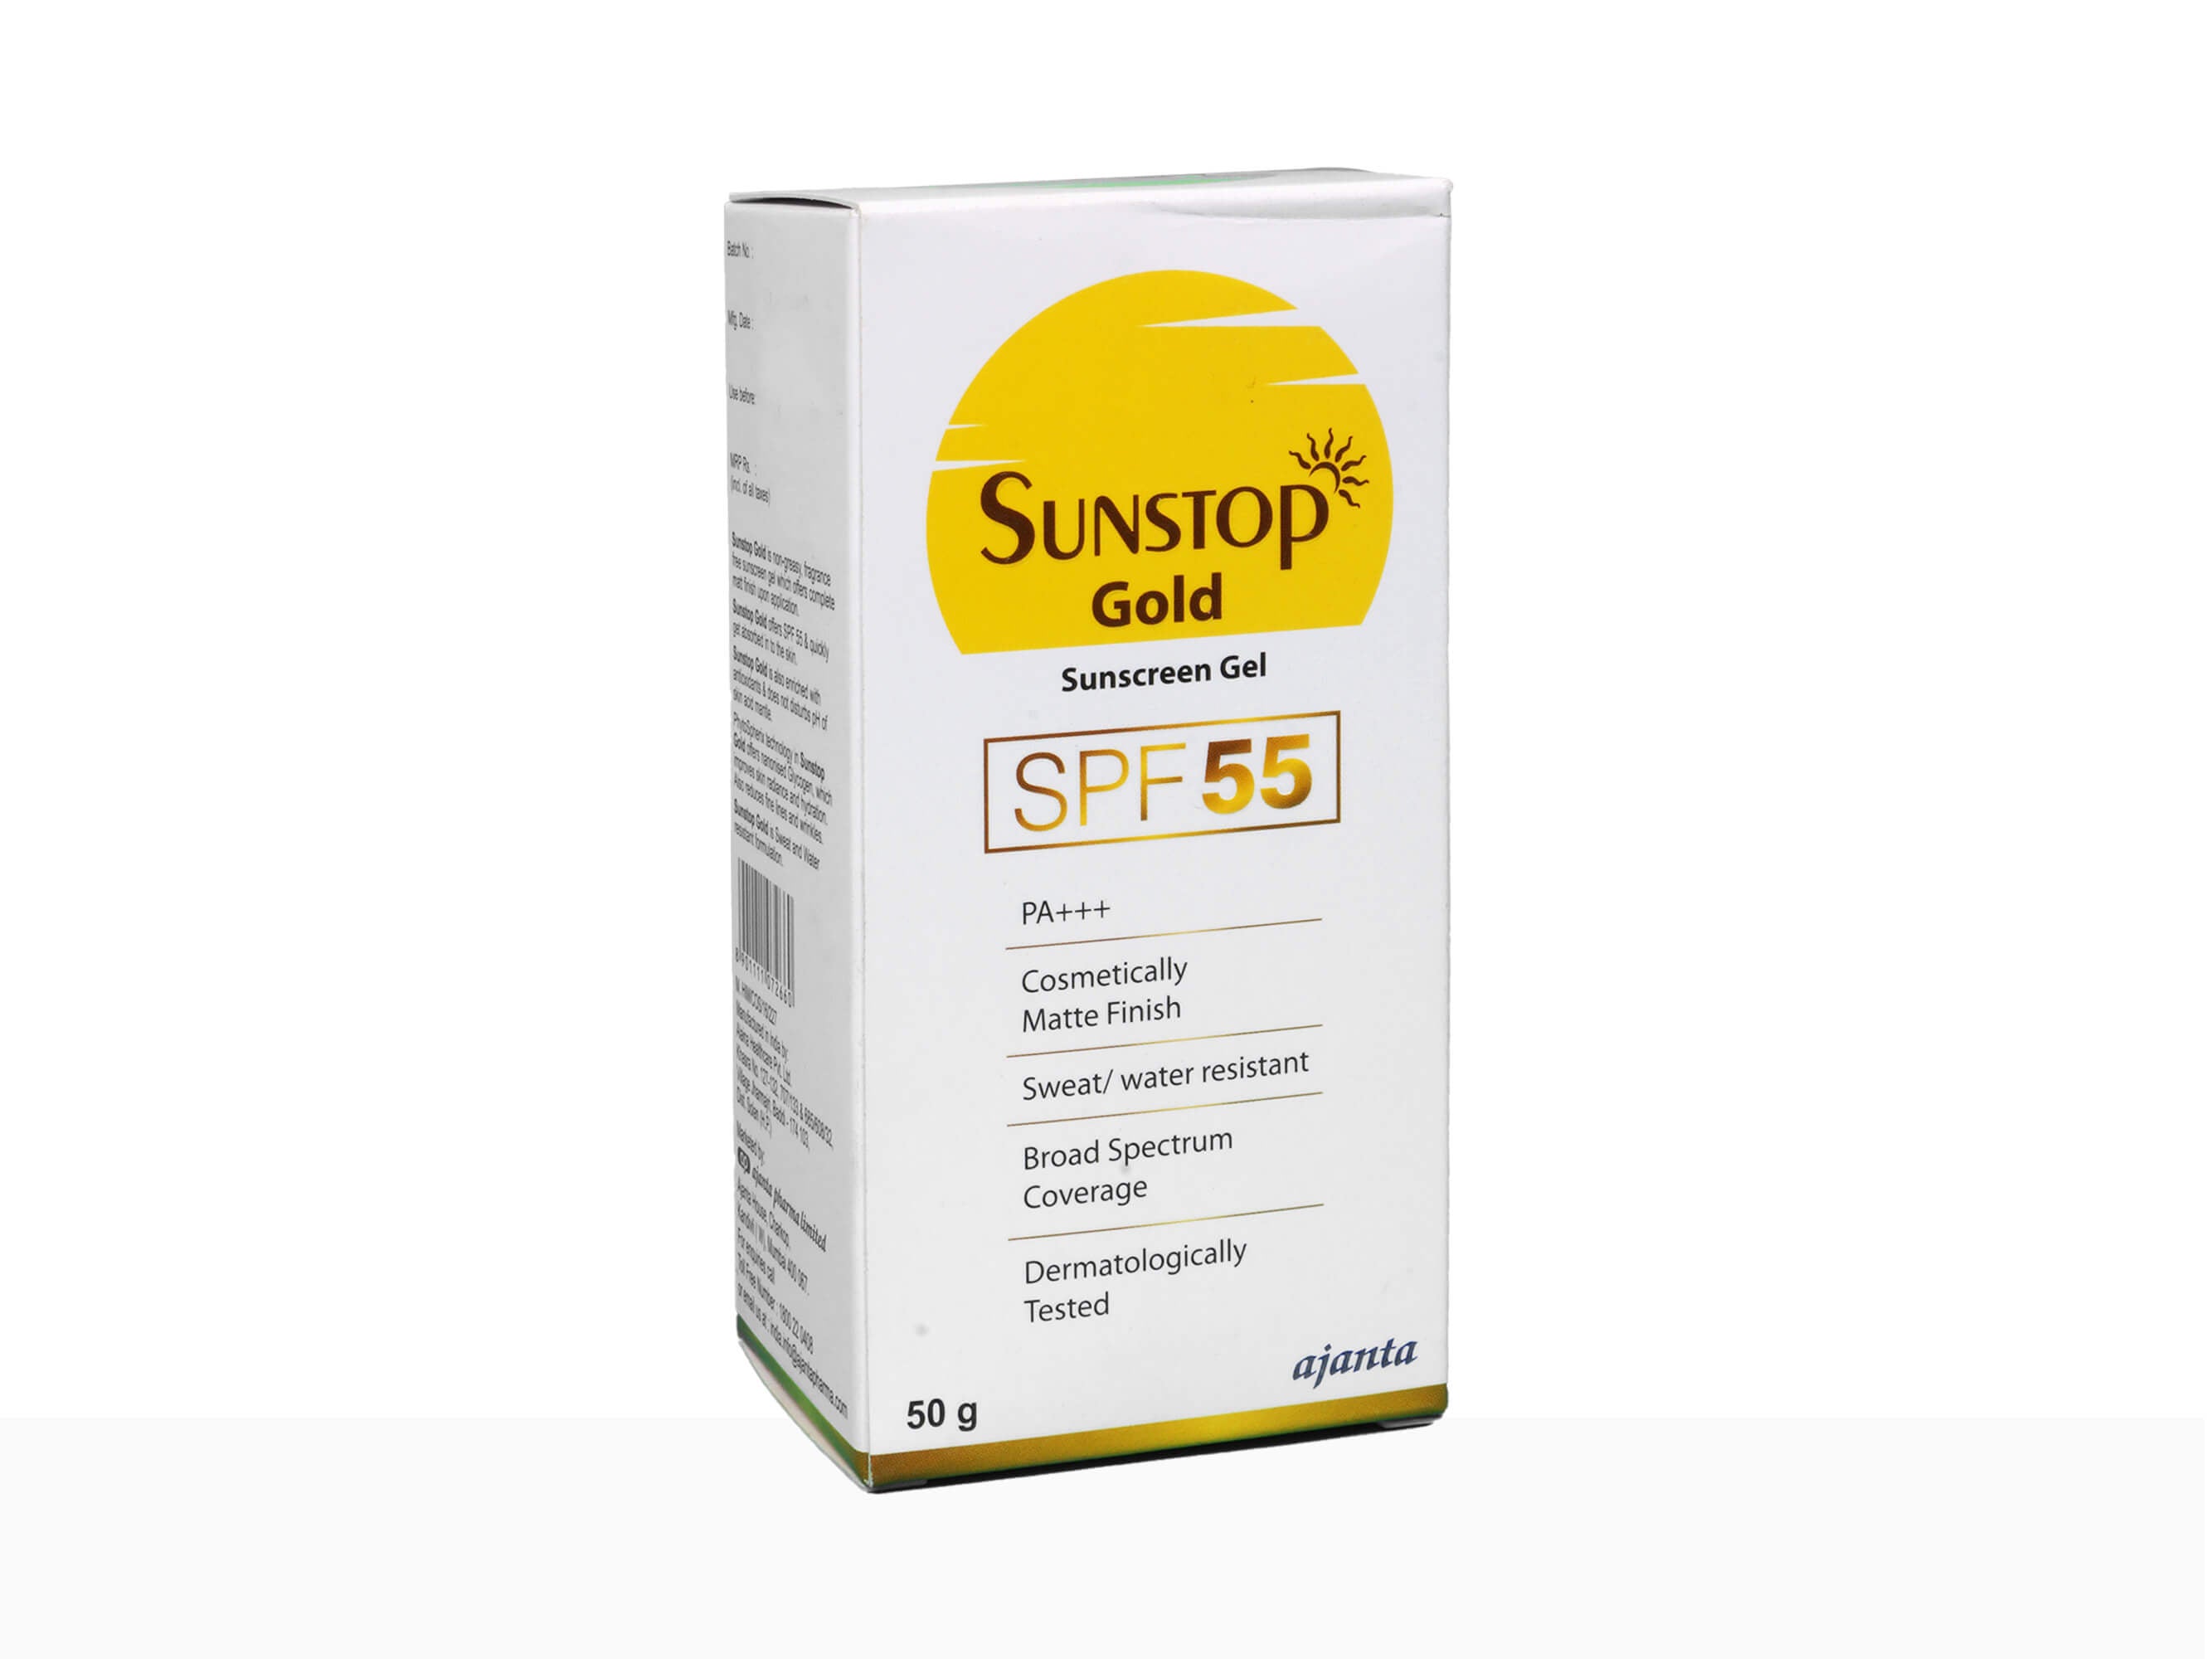 Sunstop Gold Sunscreen Gel SPF 55 PA+++ - Clinikally